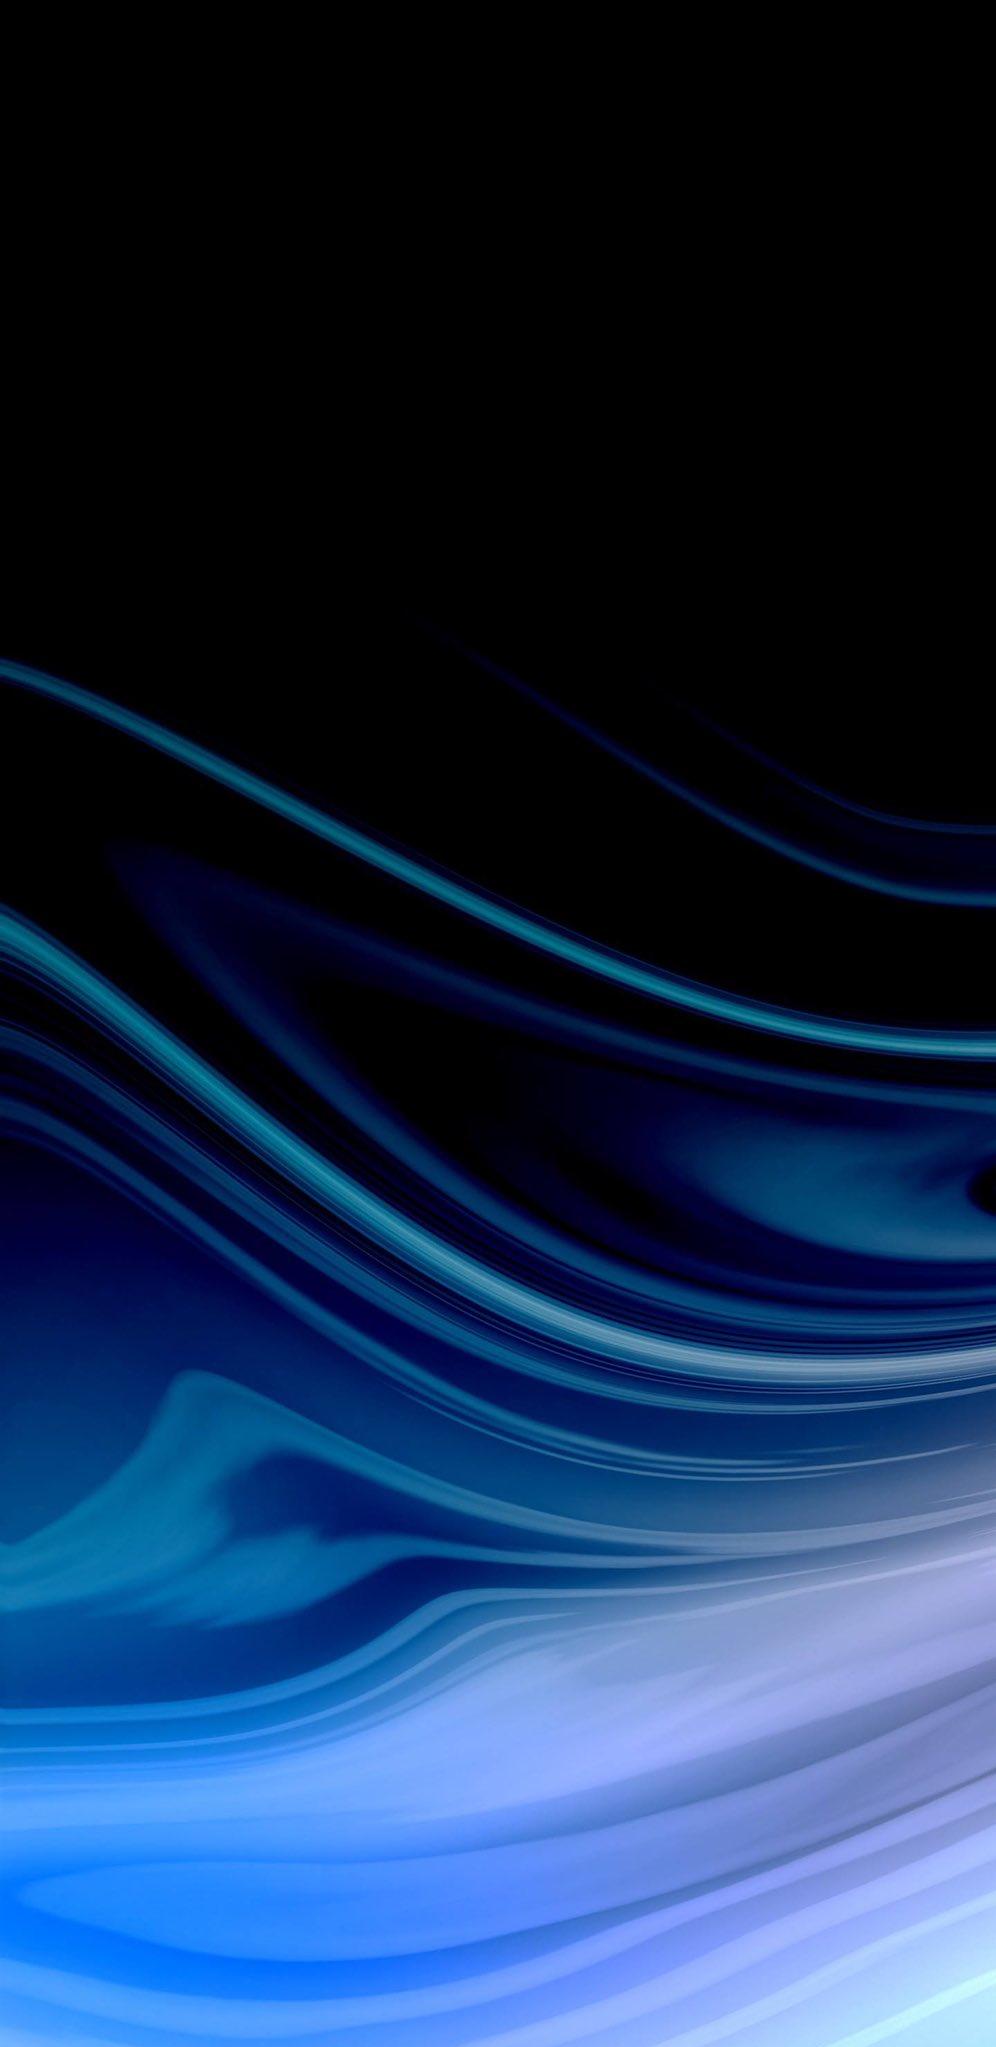 Dark Blue Aesthetic iPhone Wallpapers Top 25 Best Dark Blue Aesthetic iPhone  Wallpapers  Getty Wallpapers